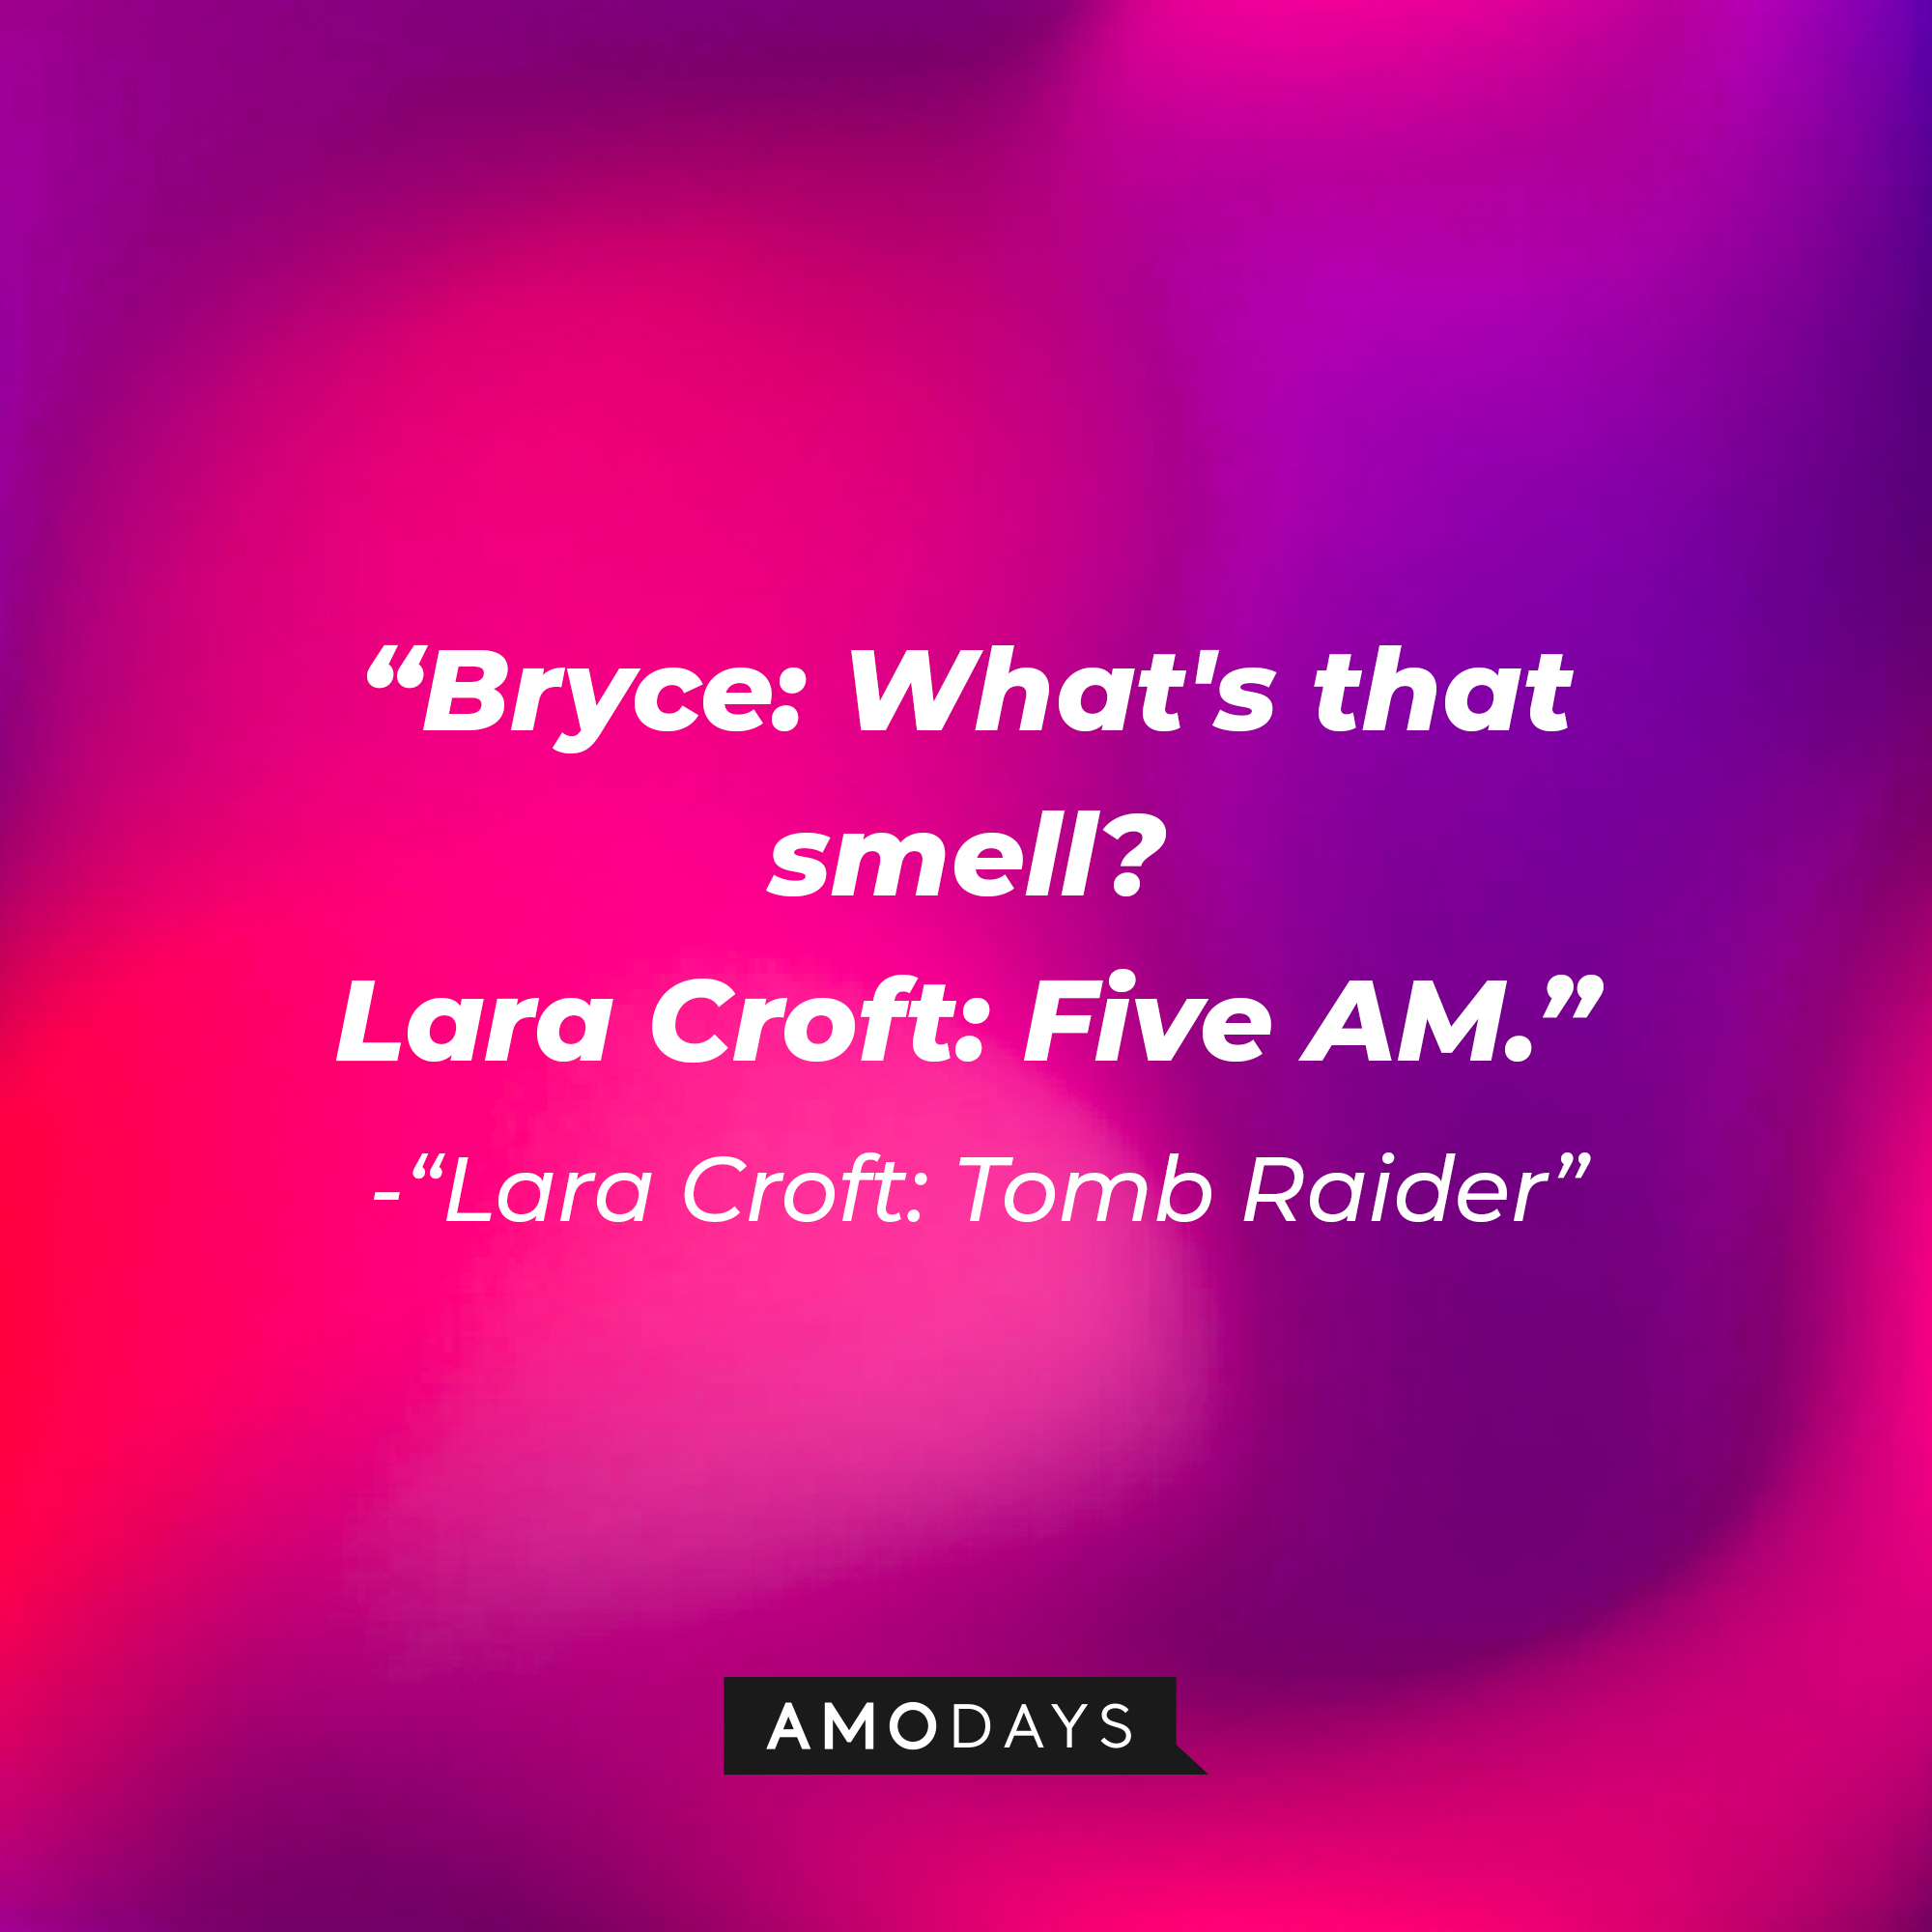 Lara Croft's "Lara Croft: Tomb Raider" quote: "Bryce: What's that smell? / Lara Croft: Five AM." | Source: AmoDays